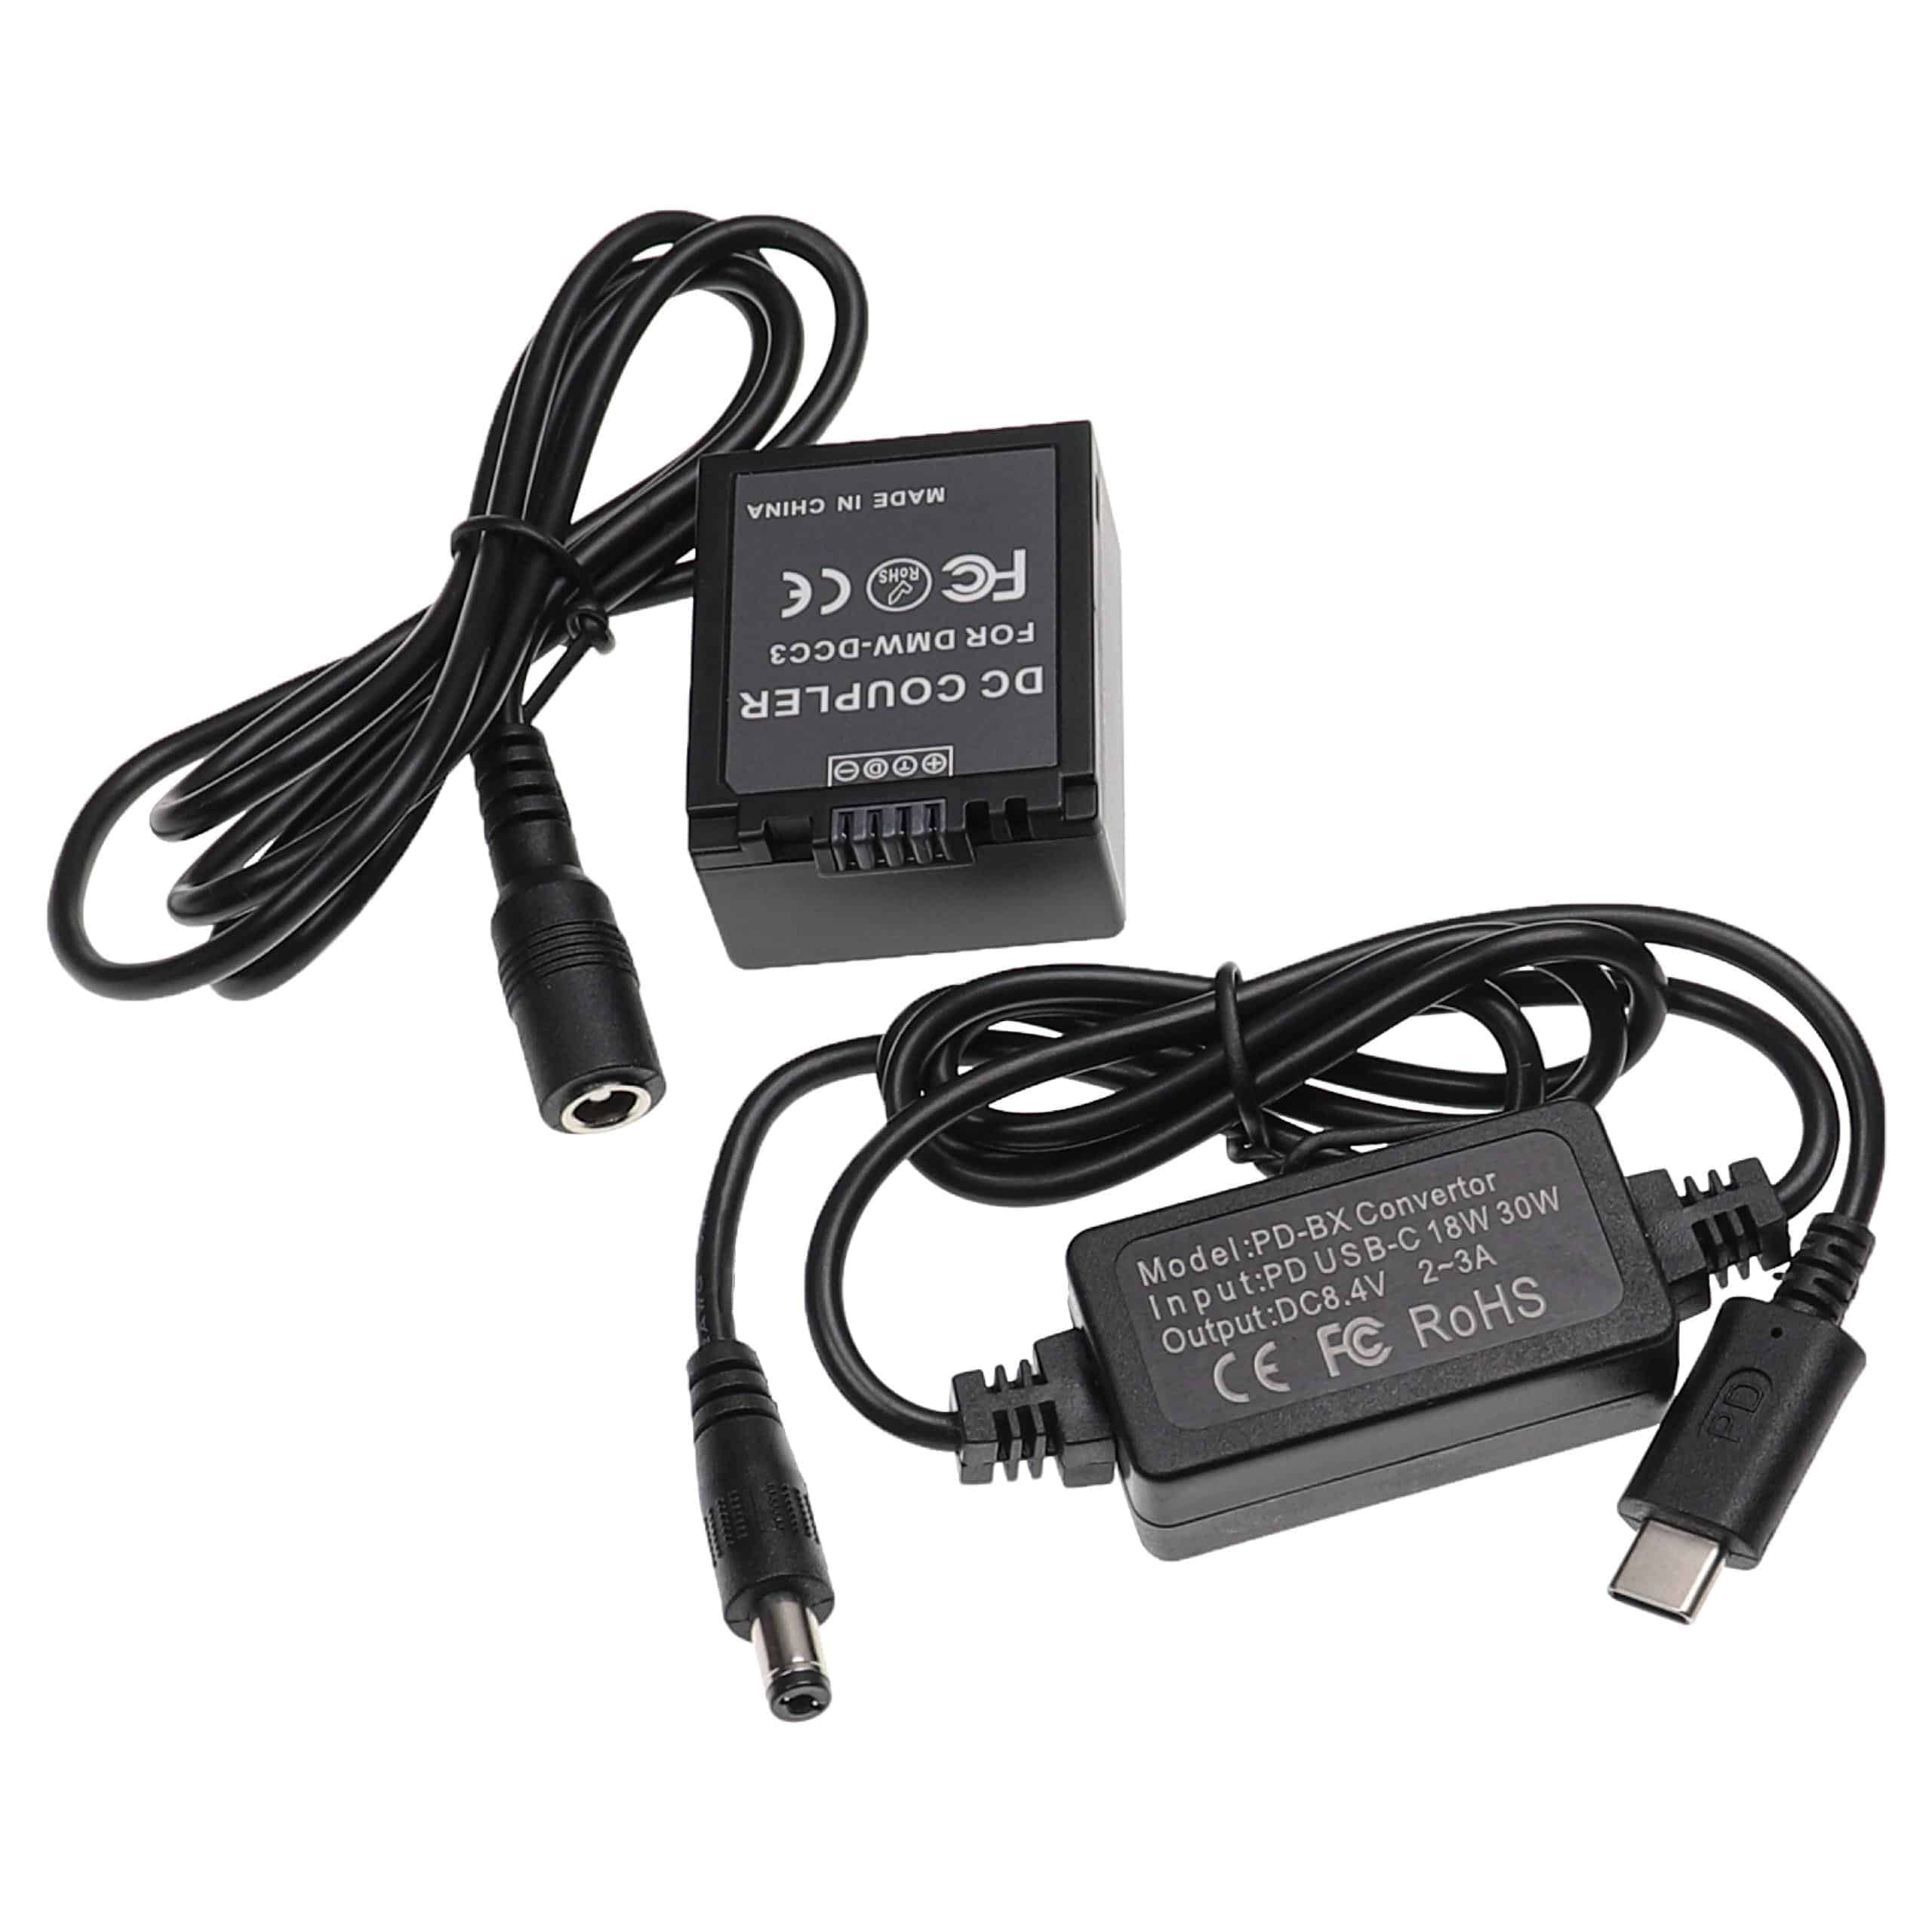 USB Power Supply replaces DMW-AC8 for Camera + DC Coupler as Panasonic DMW-DCC3 - 2 m, 8.4 V 3.0 A